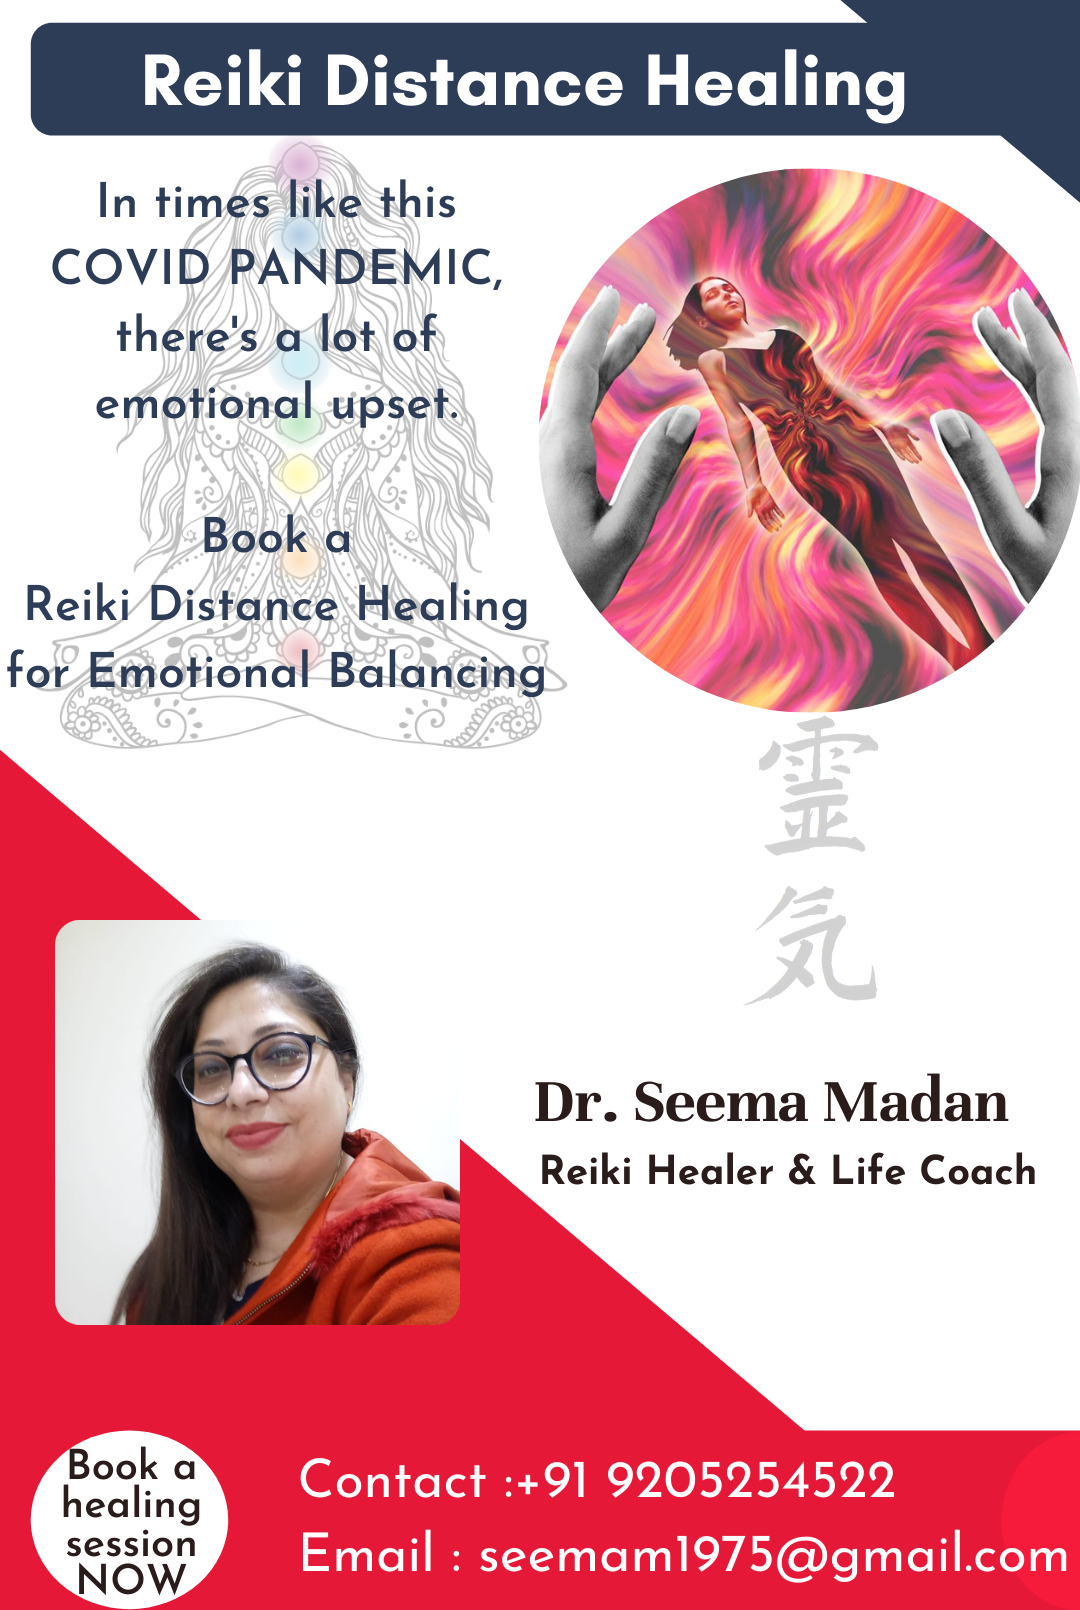 Reiki Energy Healing by Dr. Seema Madan - Coimbatore